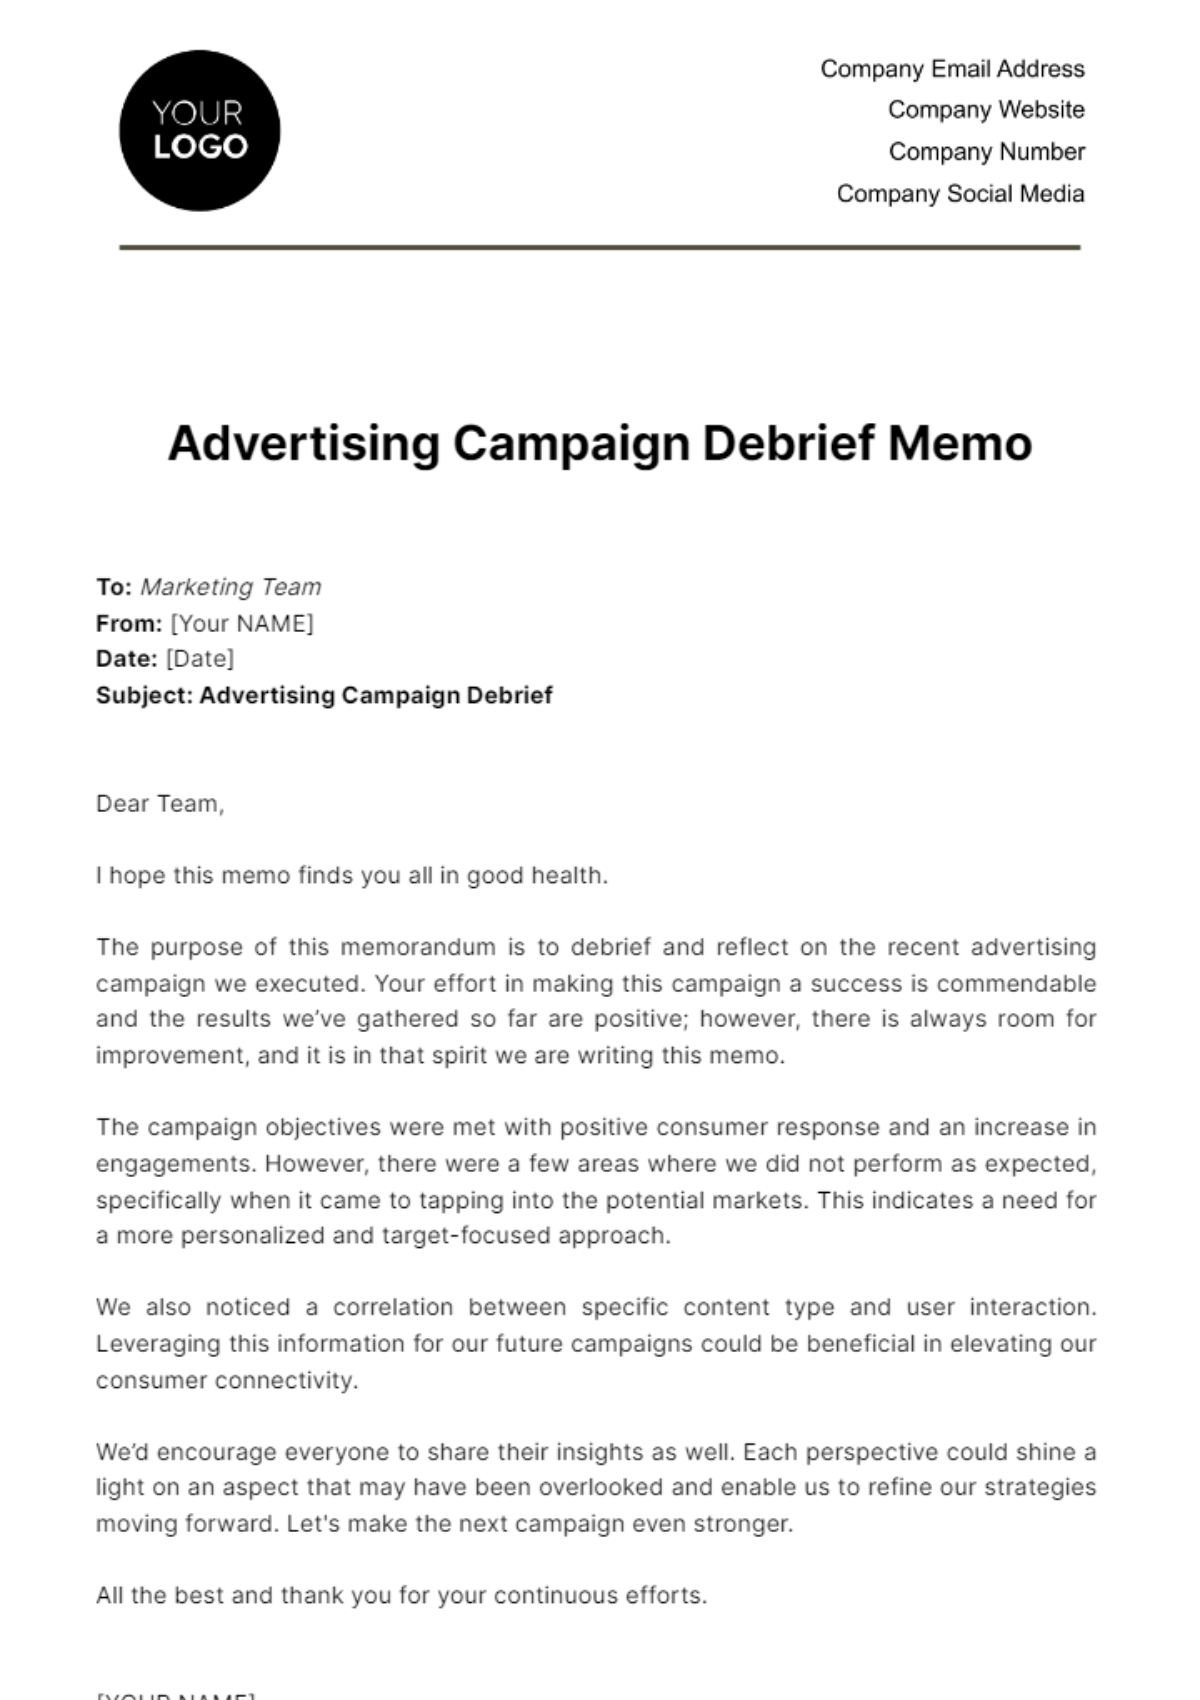 Free Advertising Campaign Debrief Memo Template